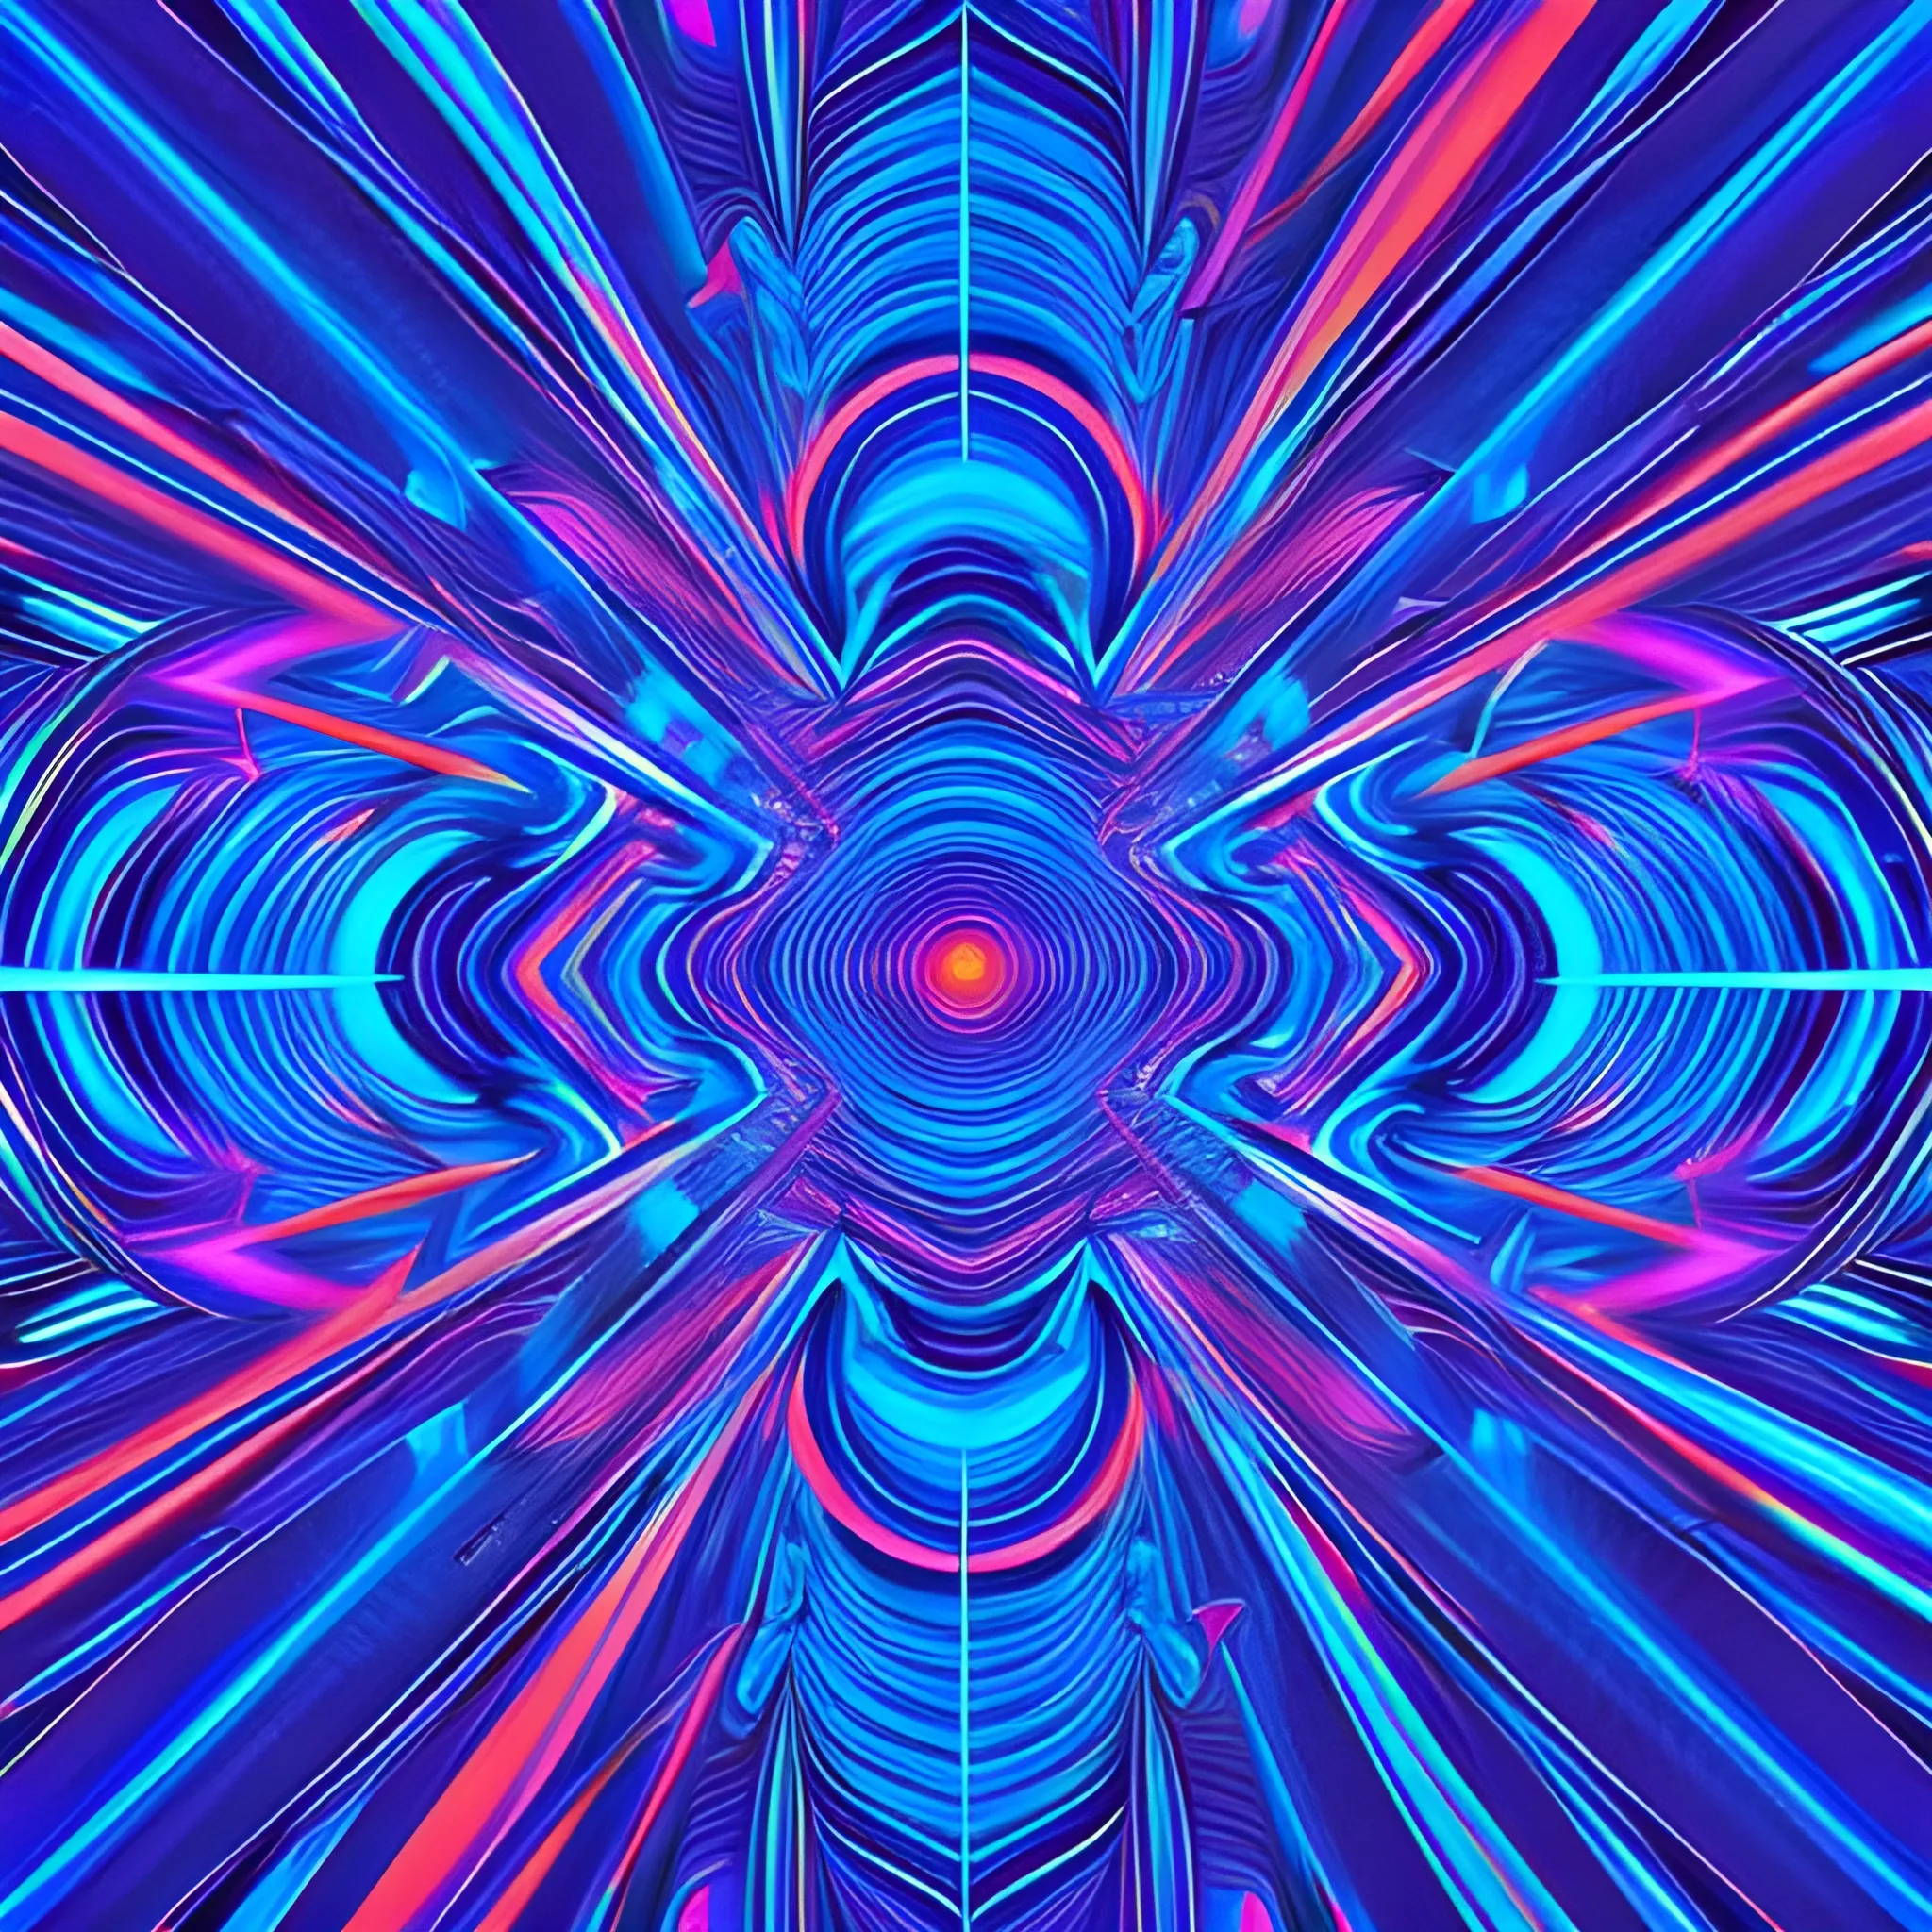 Electric blue background digital art illustration , Trippy